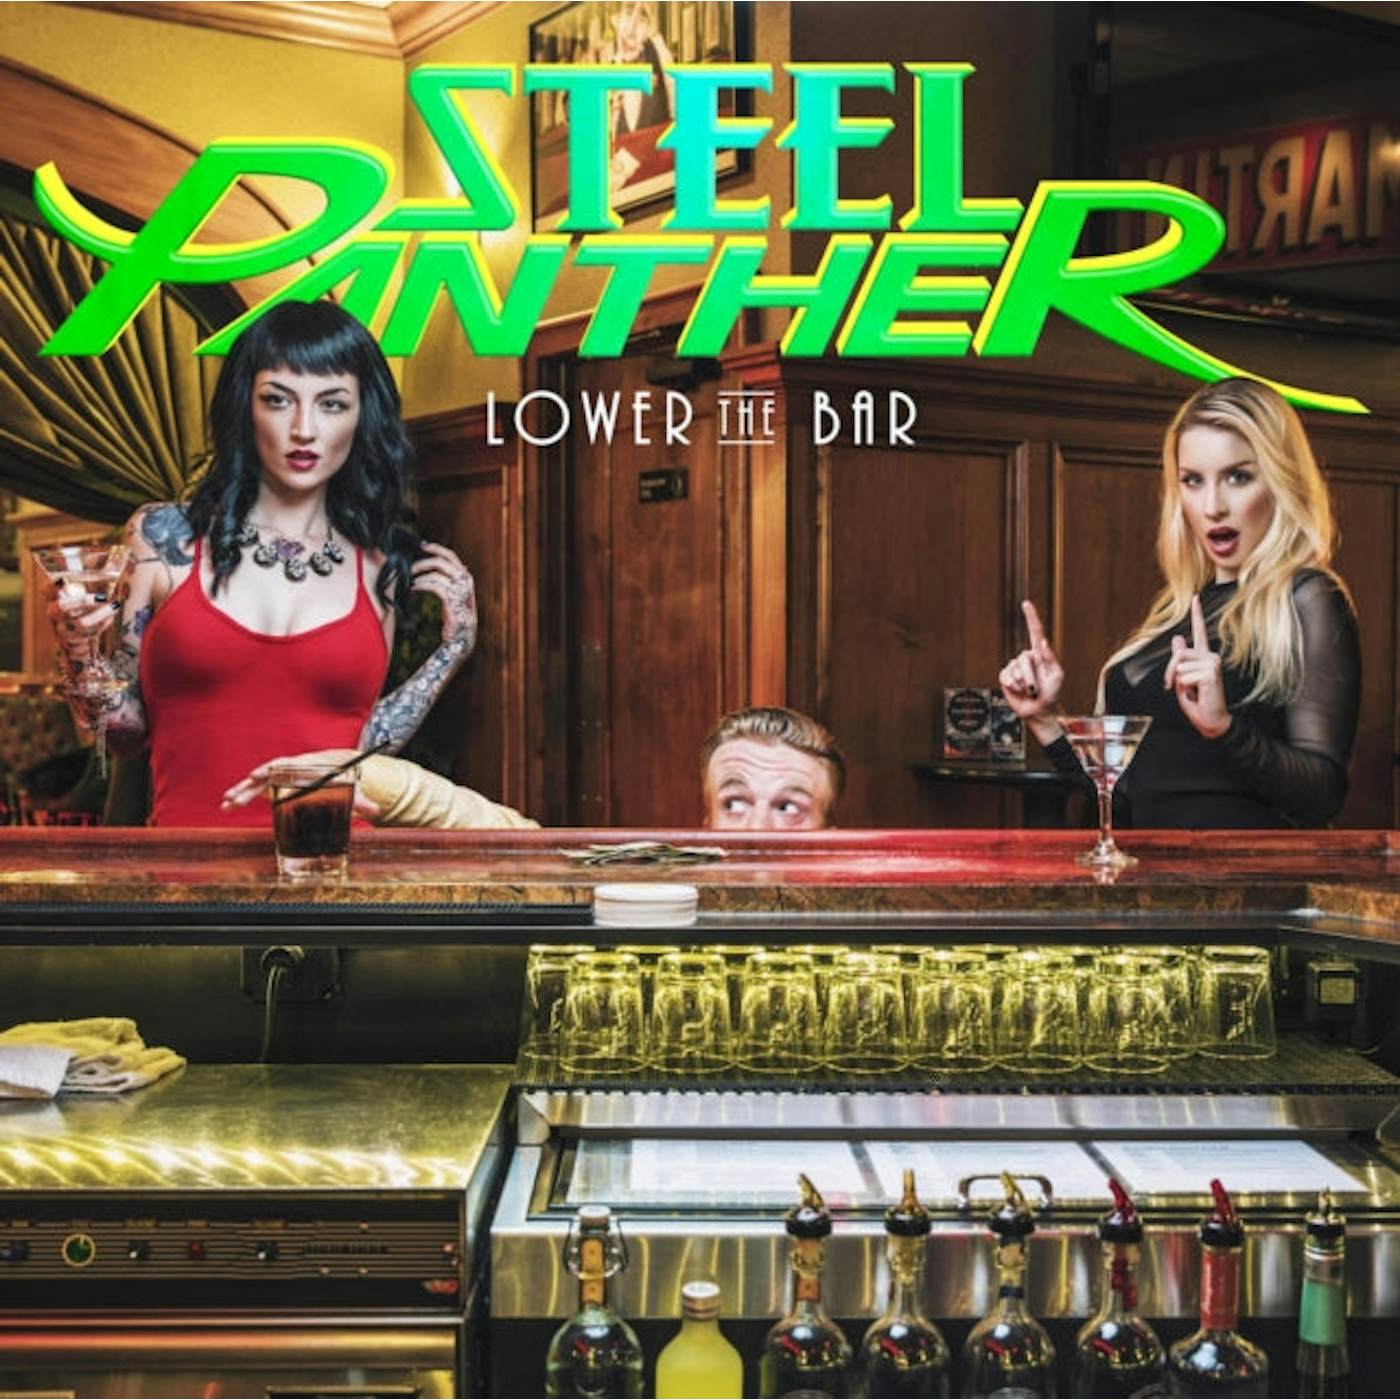  Steel Panther LP - Lower The Bar (Vinyl)